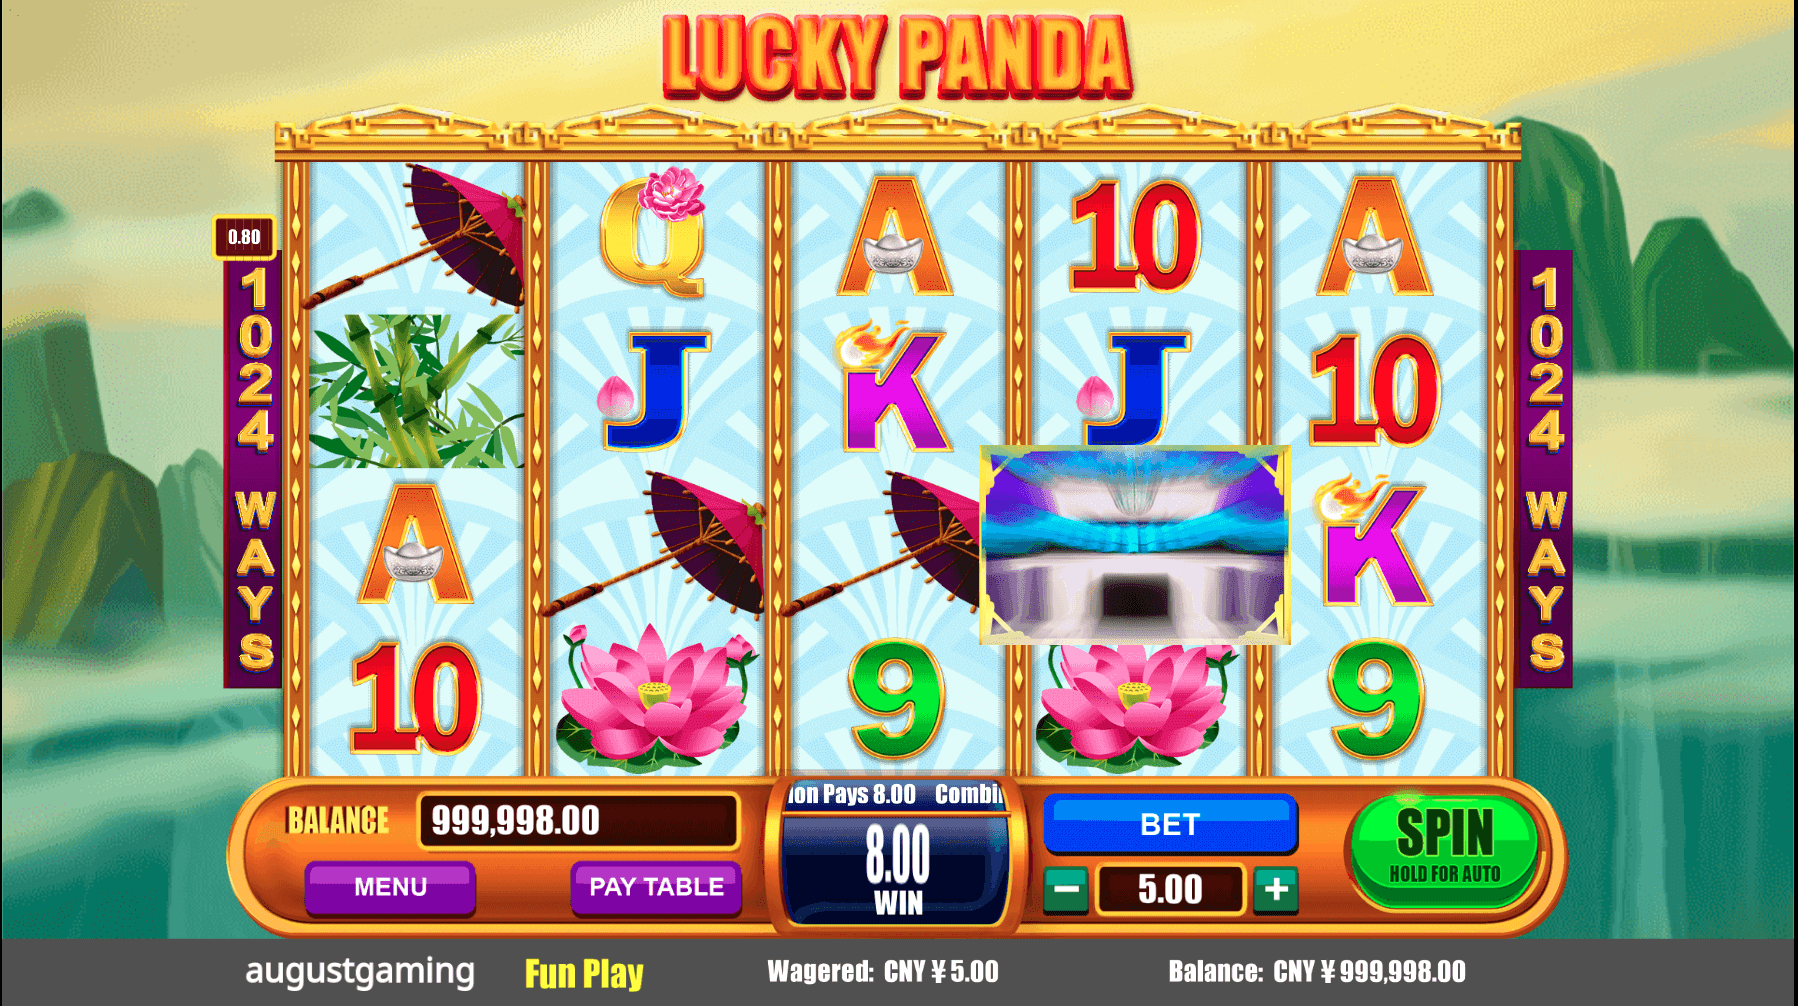 August Gaming Lucky Panda